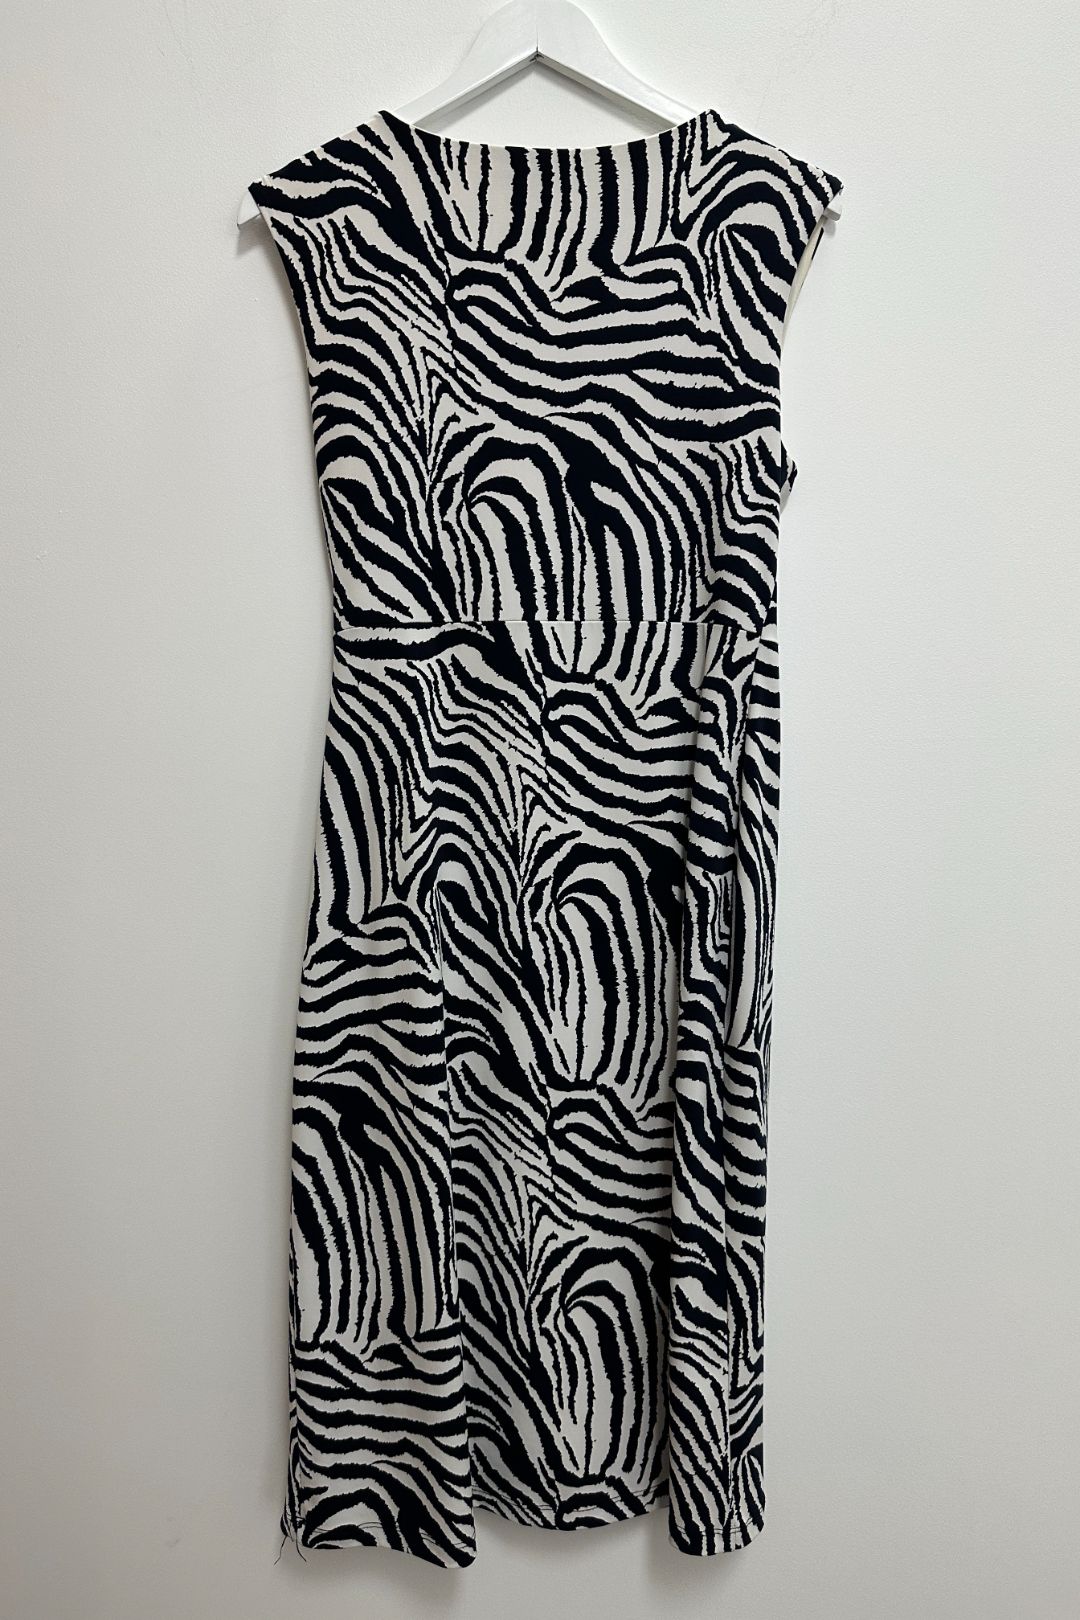 Perri Cutten Black And White Animal Print Dress